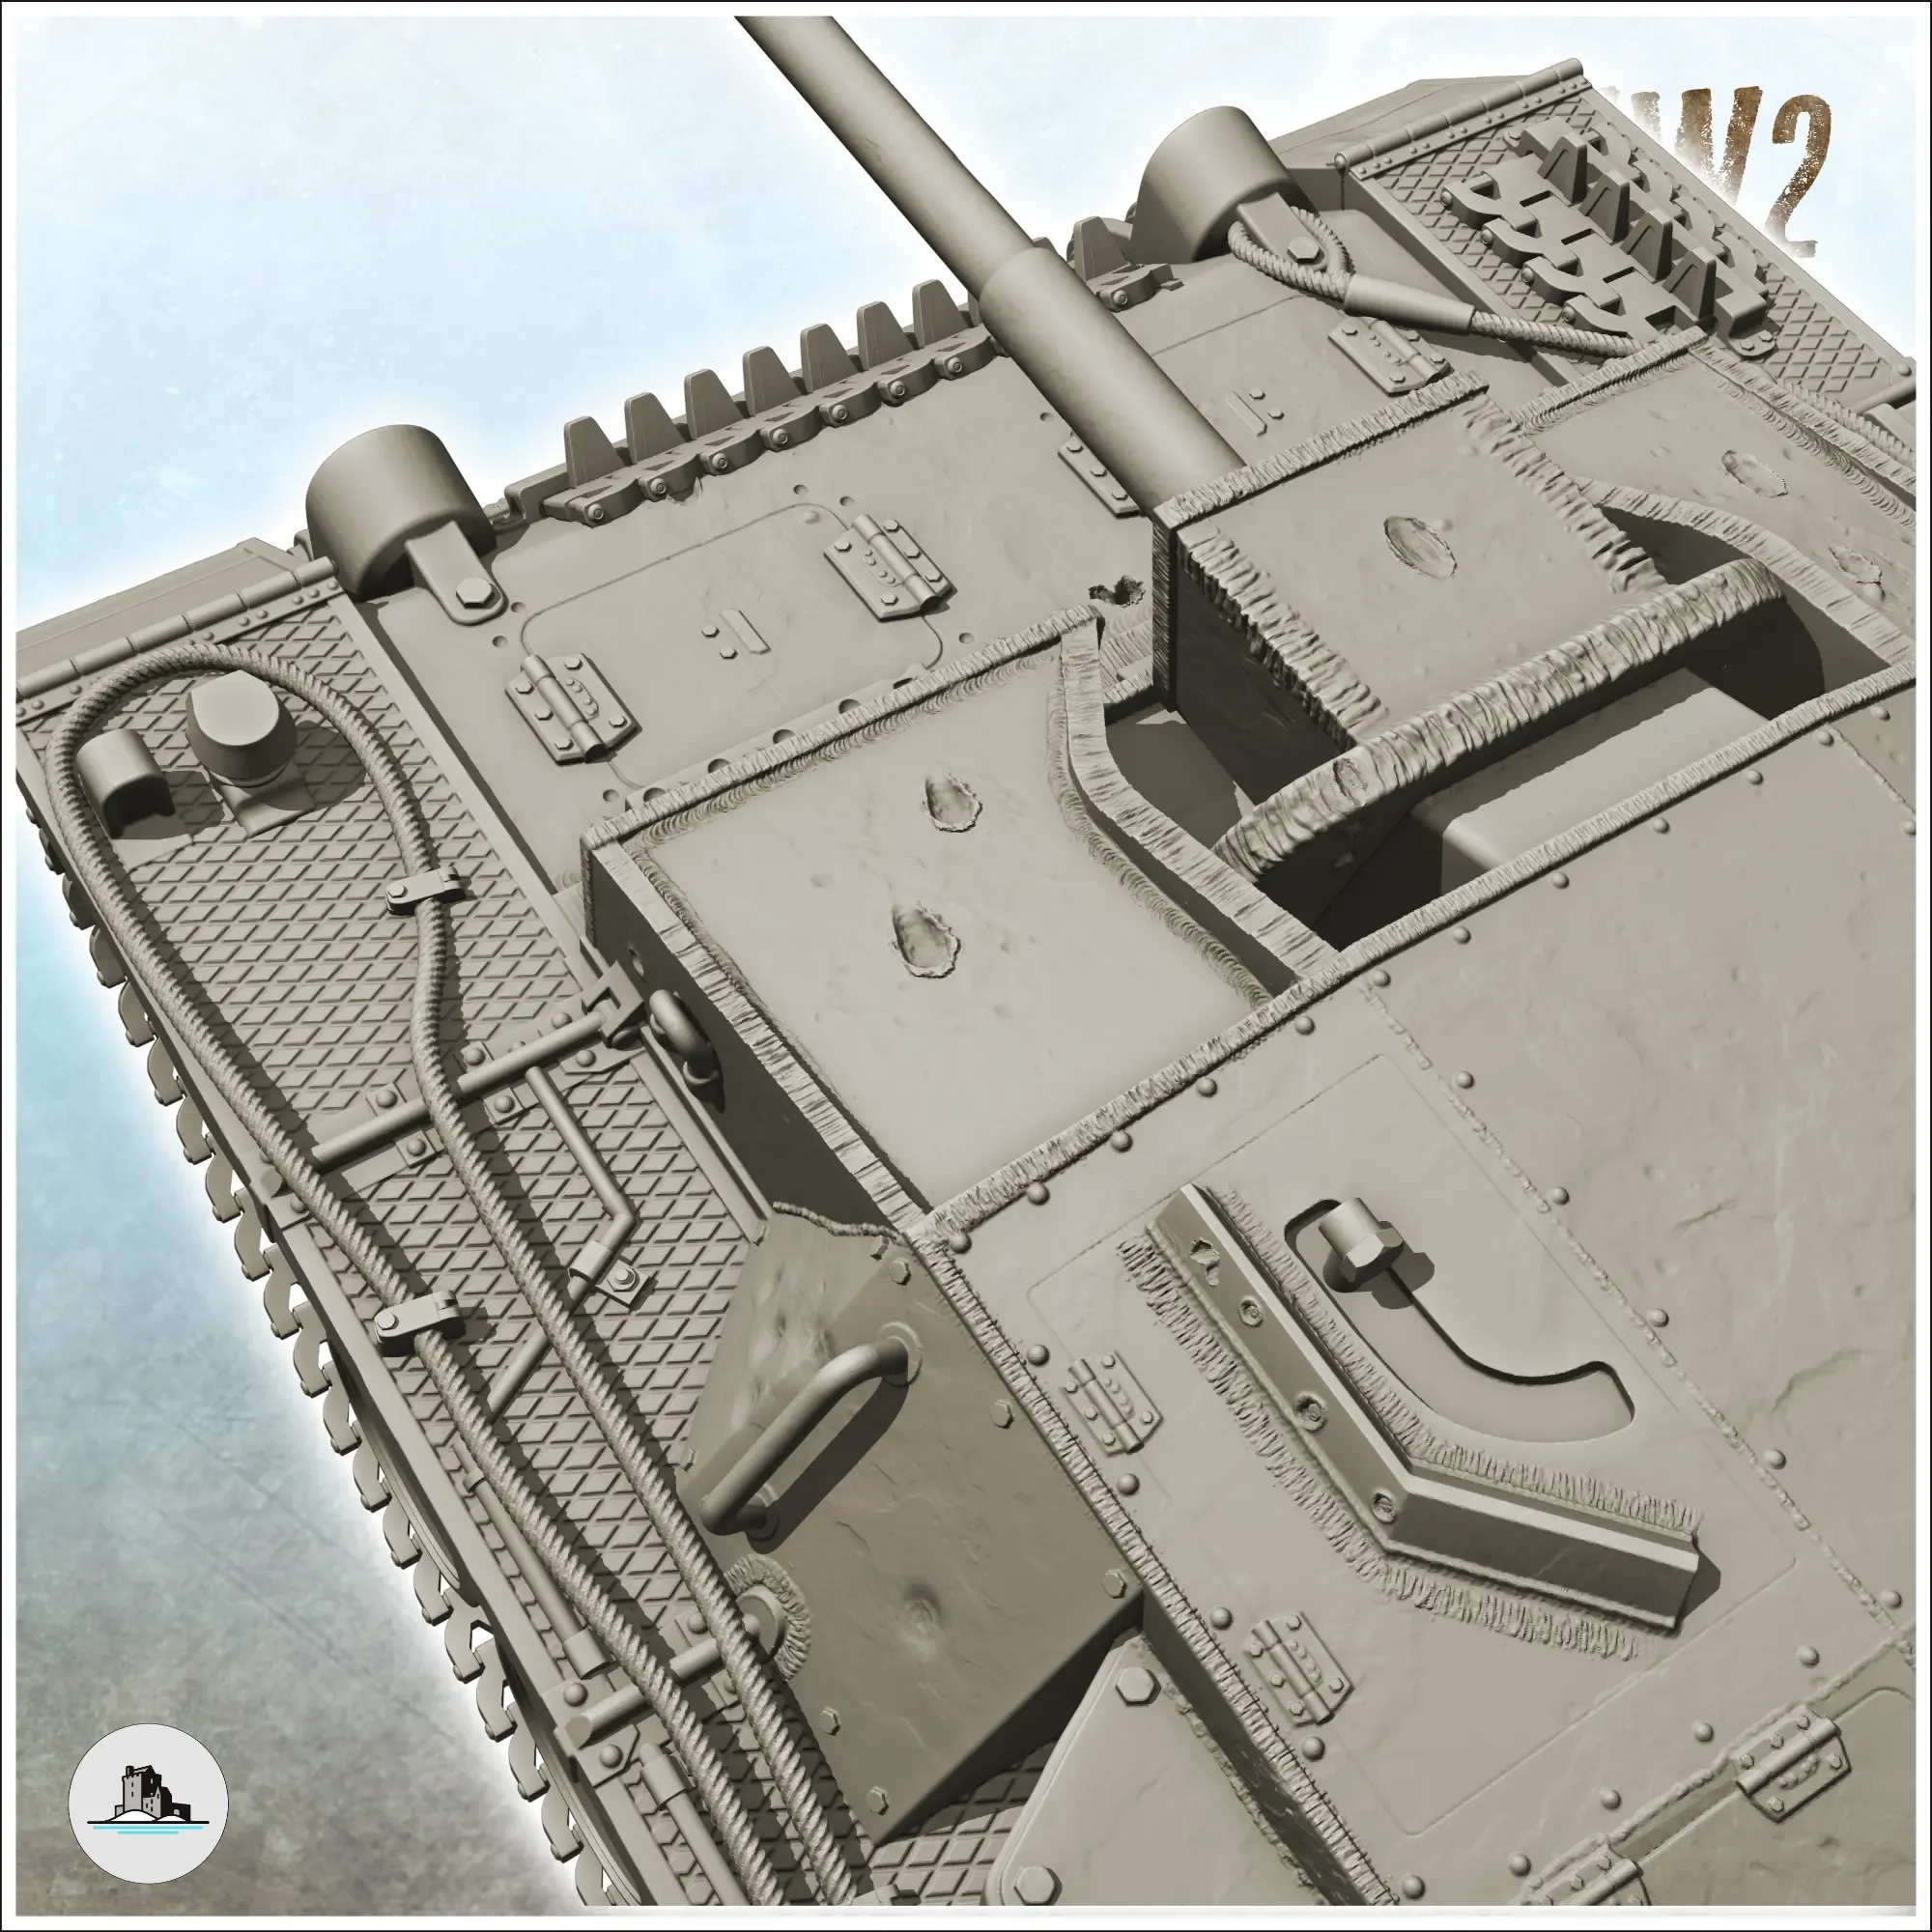 StuG III Ausf. G - WW2 German Flames of War Bolt Action